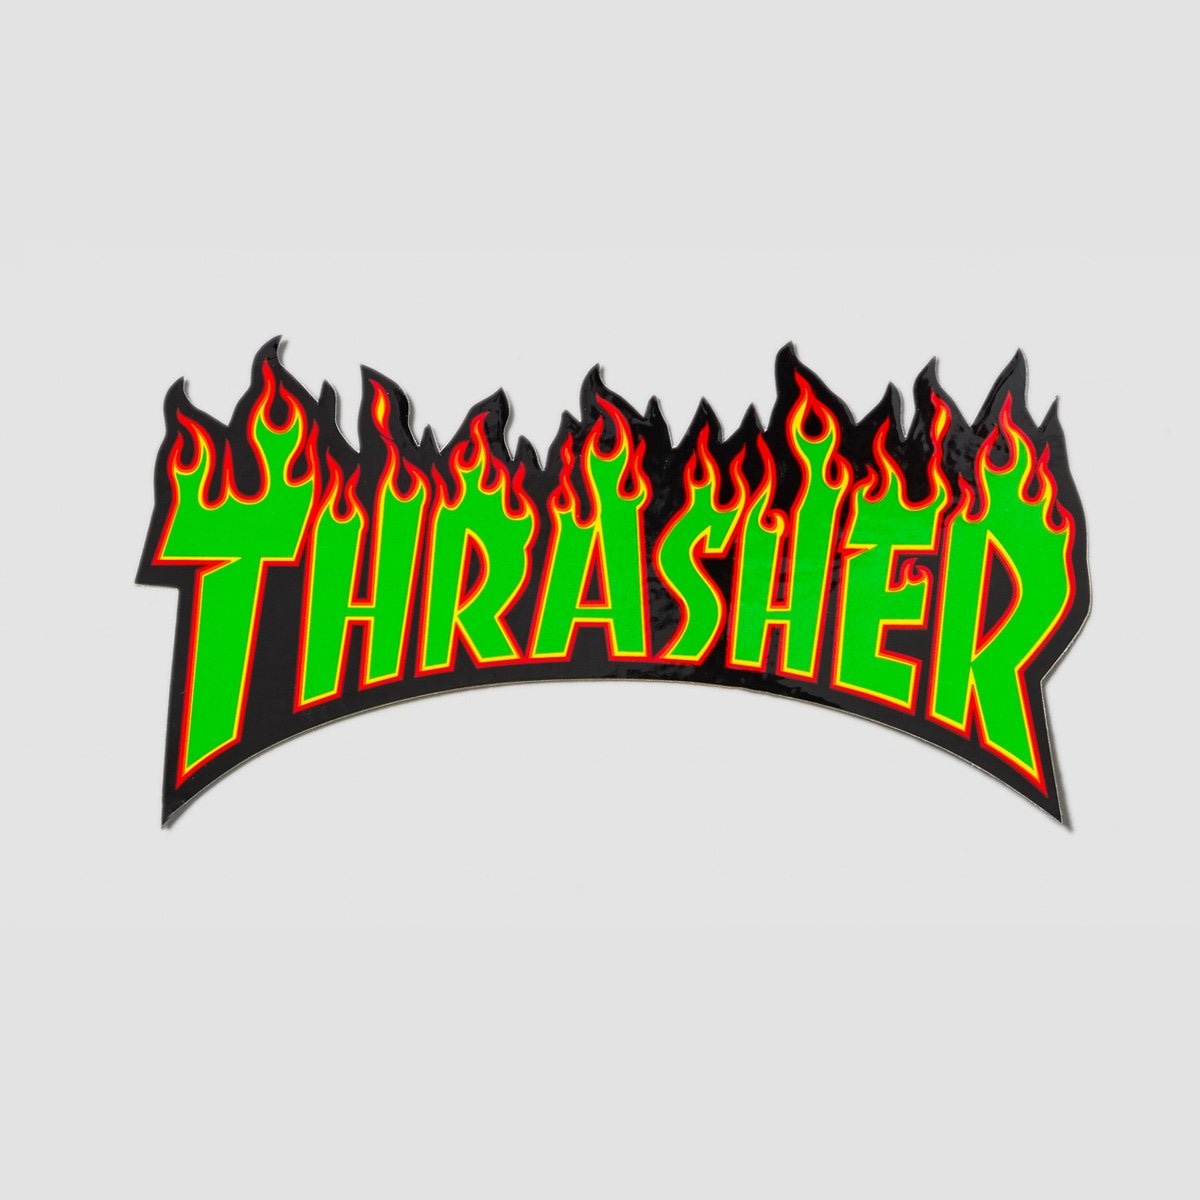 Thrasher Flame Logo Large Sticker Green/Black 260mm x 135mm - Skateboard